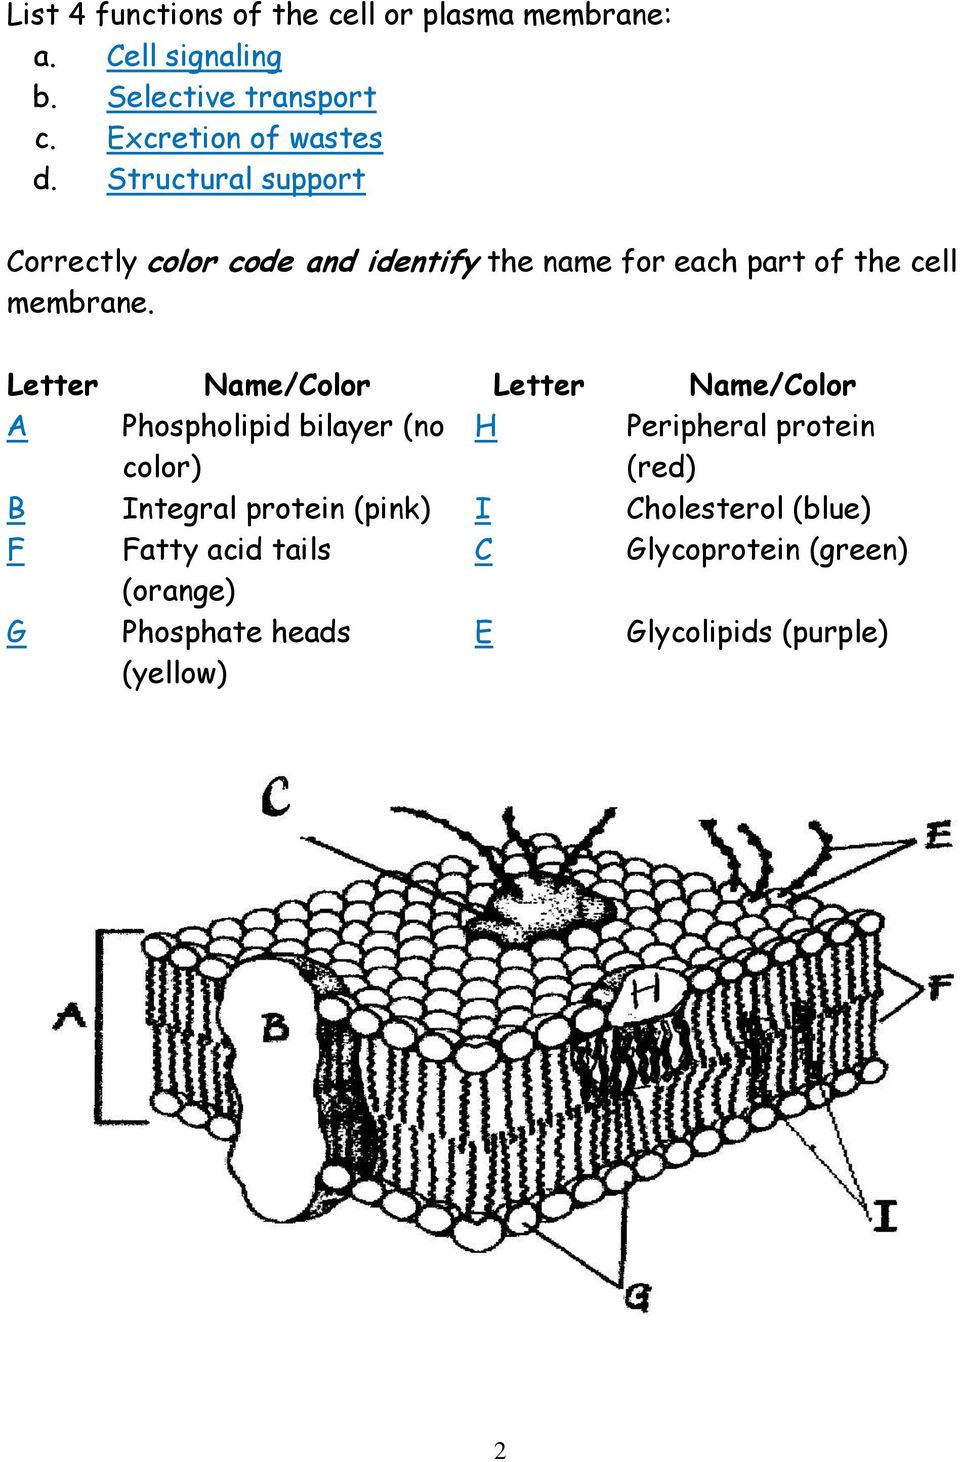 Cell Membrane Coloring Worksheet - PDF Free Download Within Cell Membrane Images Worksheet Answers